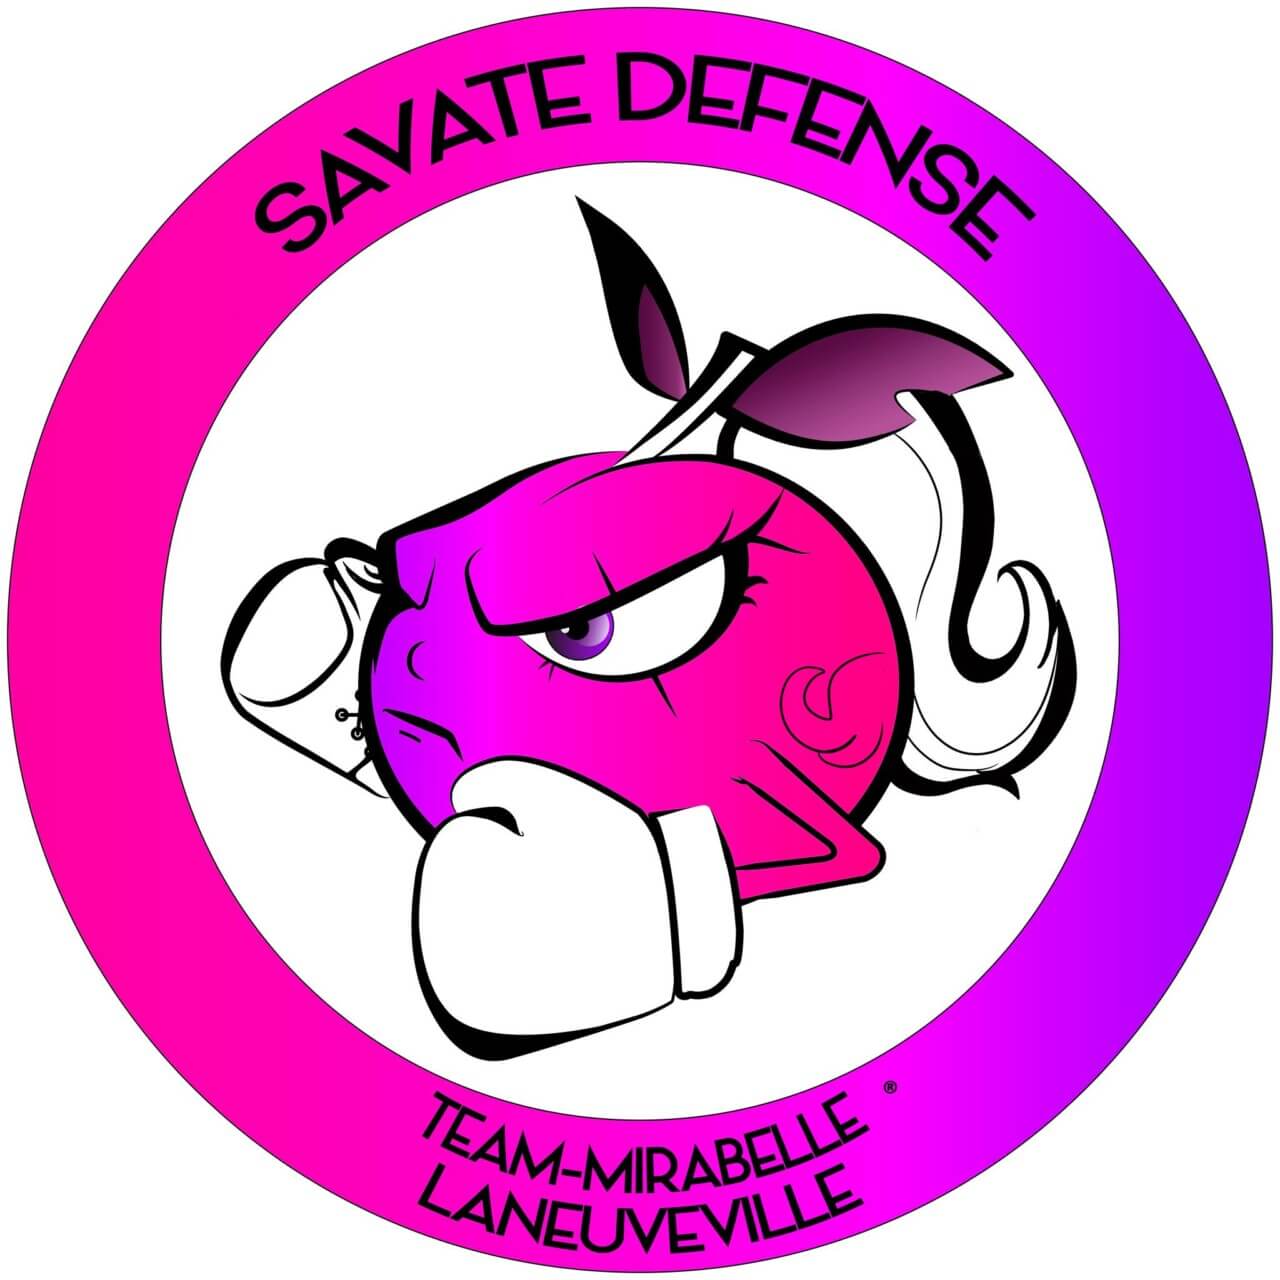 Savate Laneuveville logo-team-mirabelle-women Savate Défense  